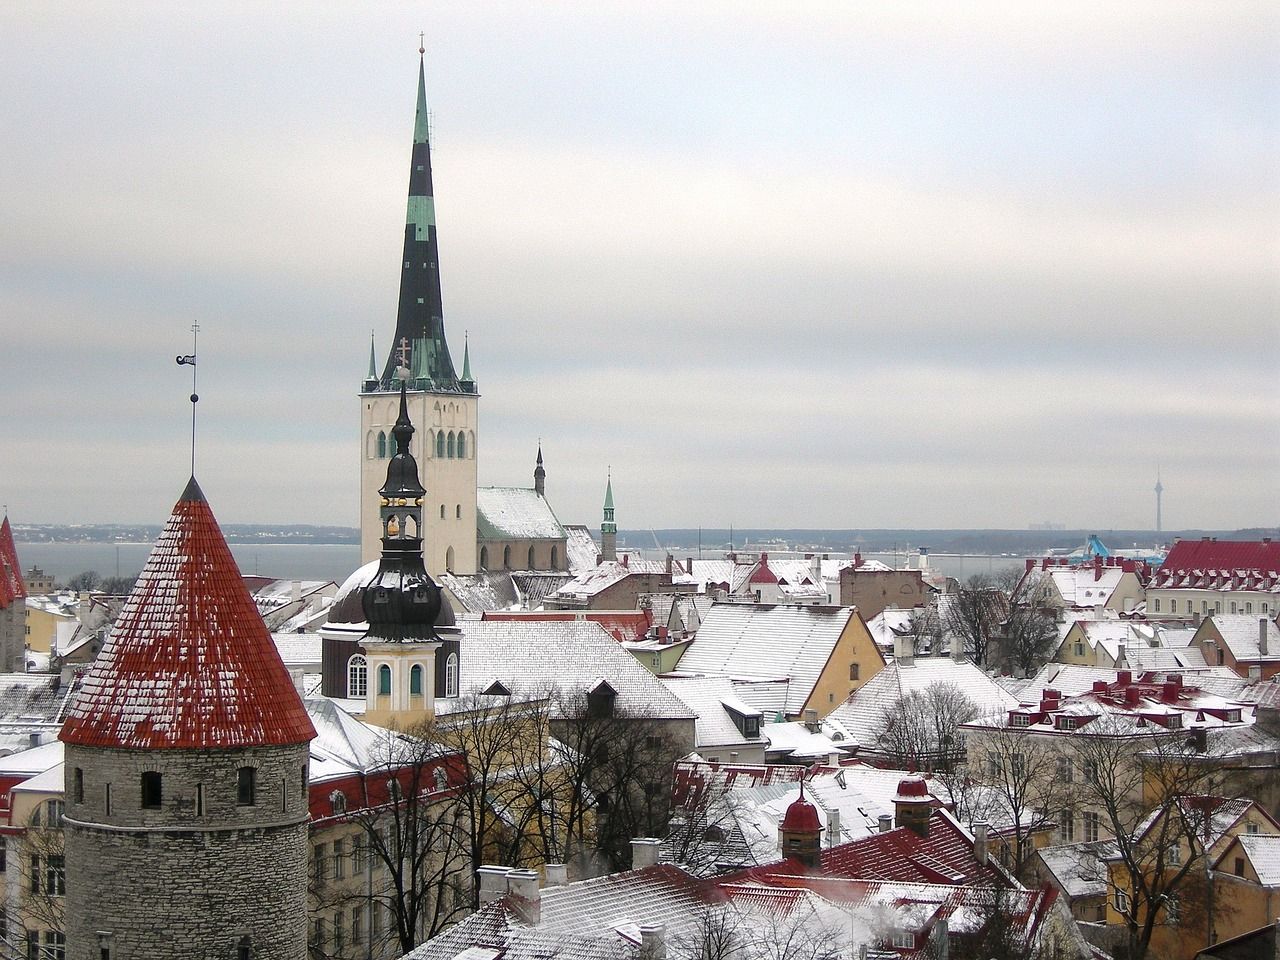 Tallinn, Estonia for a winter city break